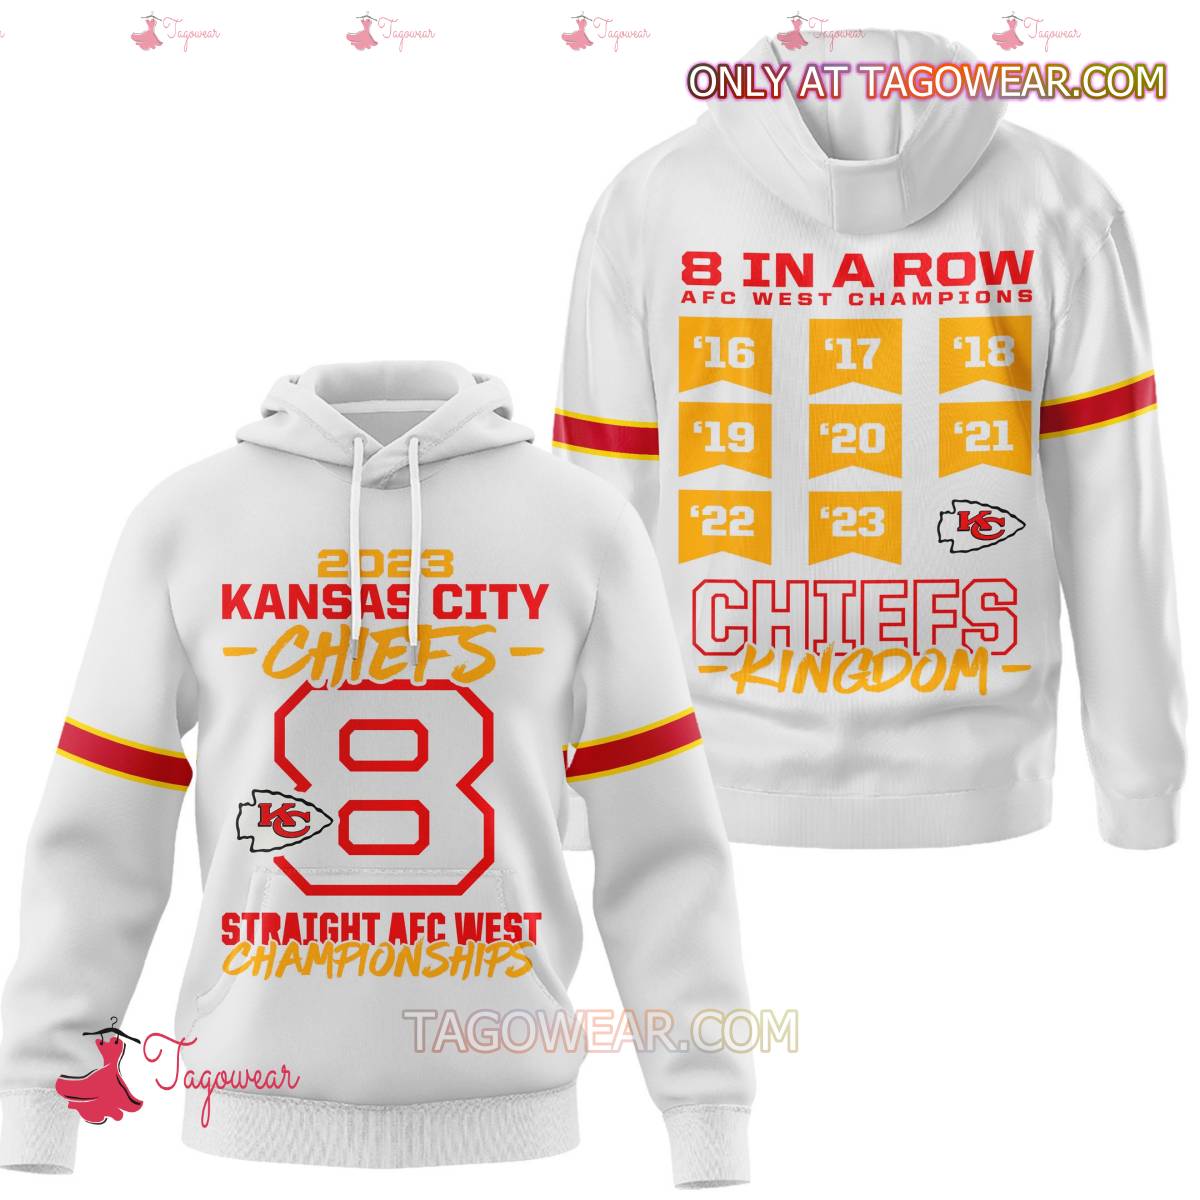 2023 Kansas City Chiefs 8 Straight Afc West Championships T-shirt, Hoodie